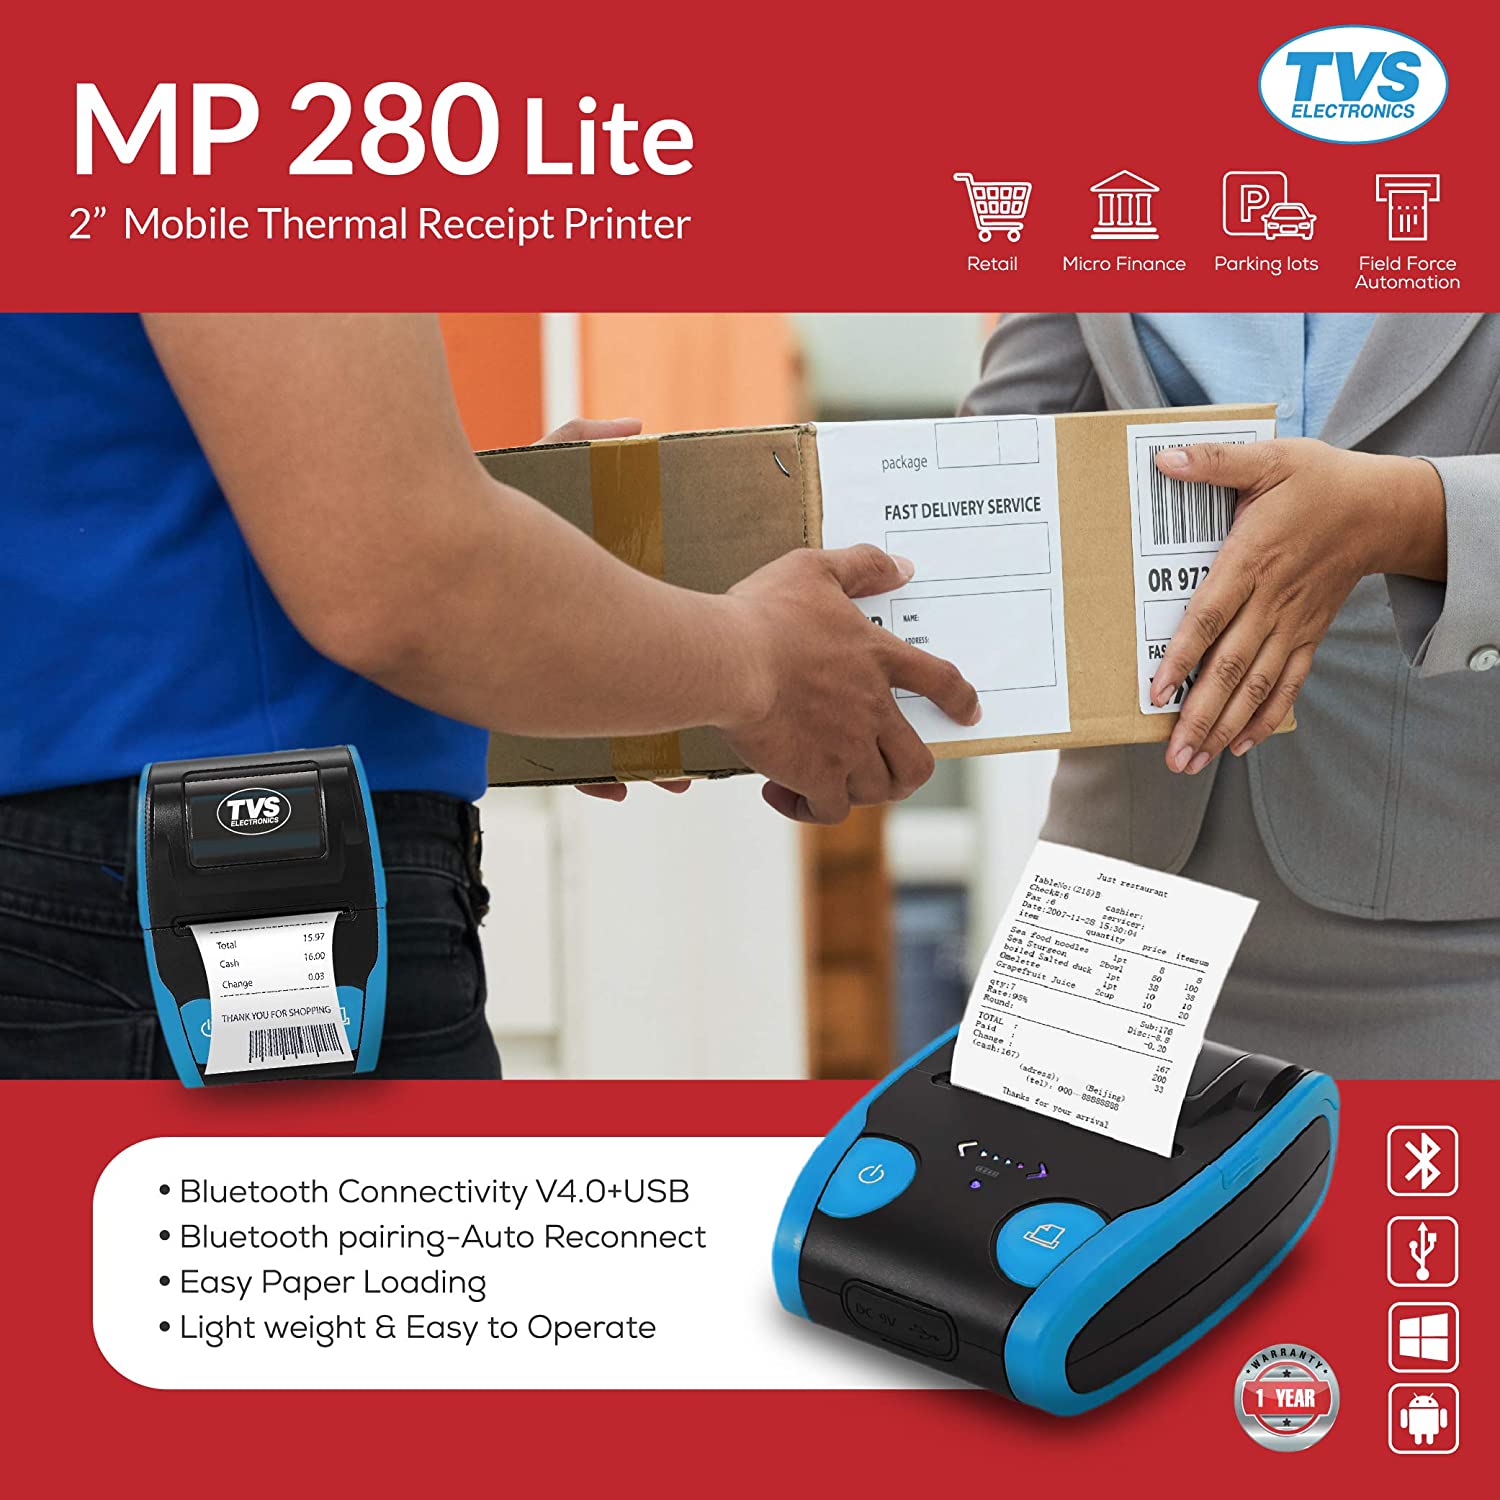 TVS Electronics MP 280 Lite Mobile Printer-Printers, Copiers & Fax Machines-dealsplant